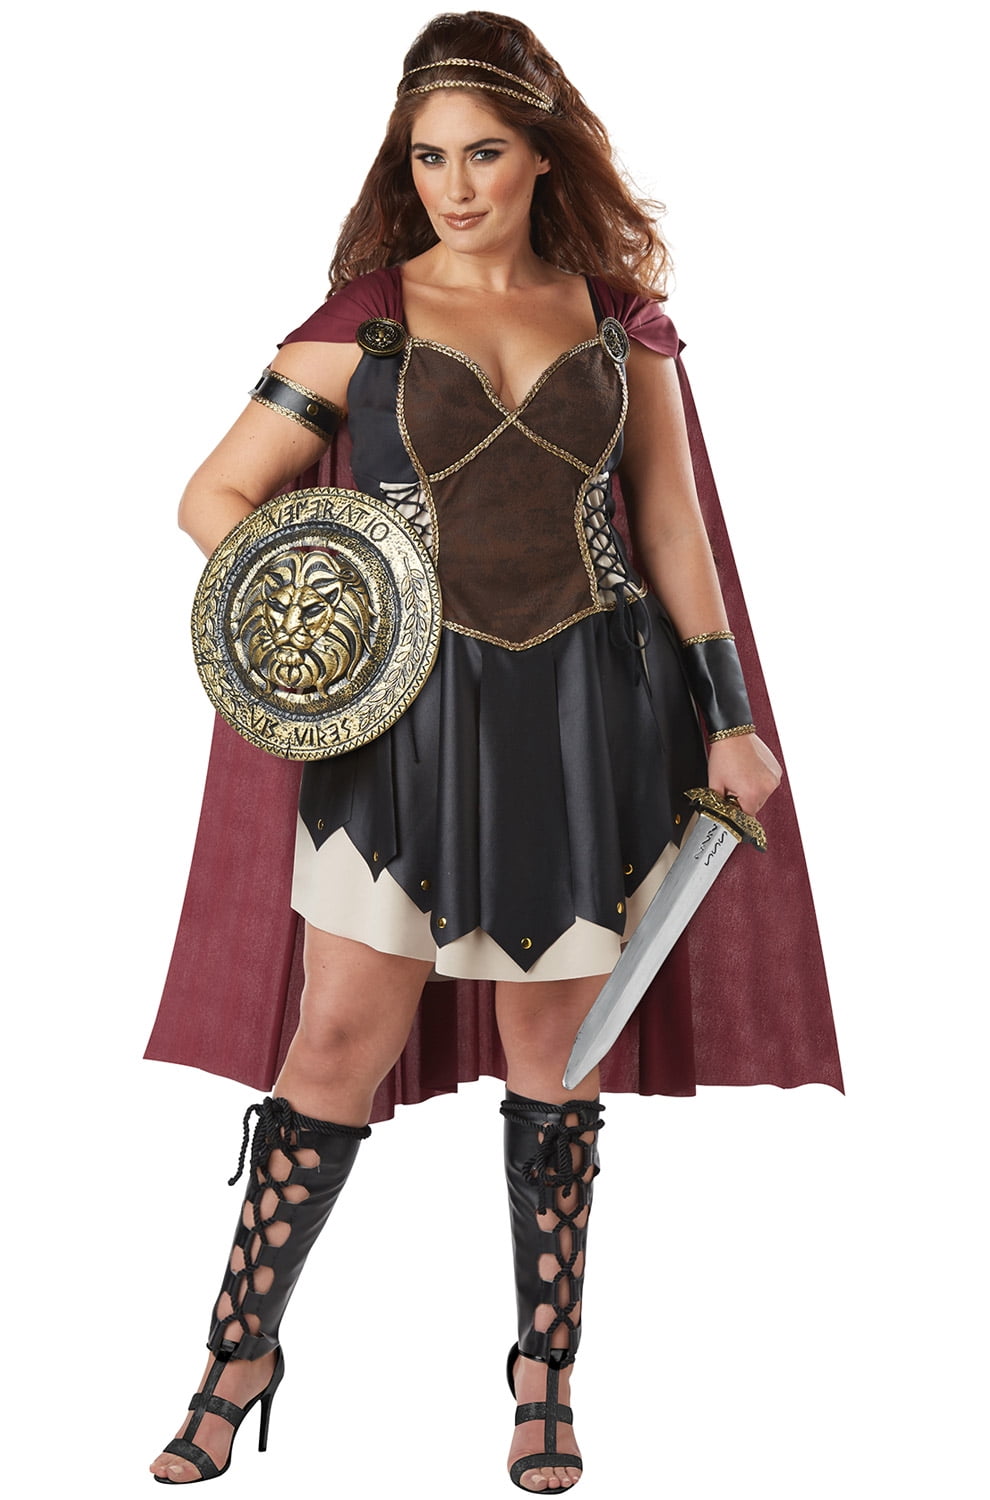 Buy Glorious Gladiator Plus Sized Adult Costume at Walmart.com.